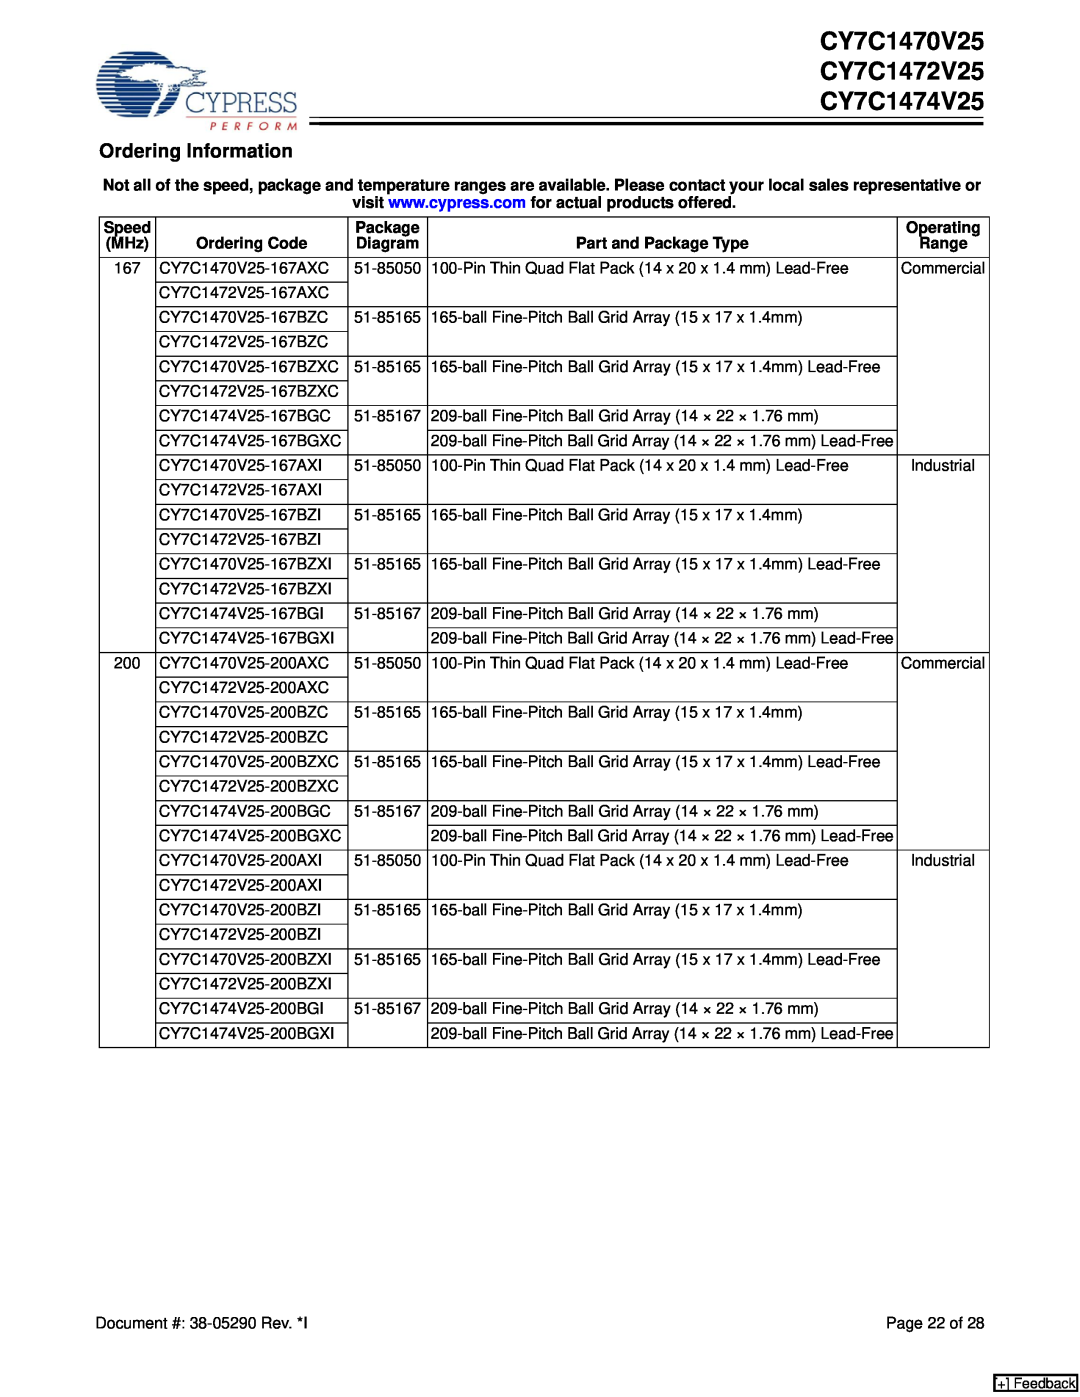 Cypress manual Ordering Information, CY7C1470V25 CY7C1472V25 CY7C1474V25 